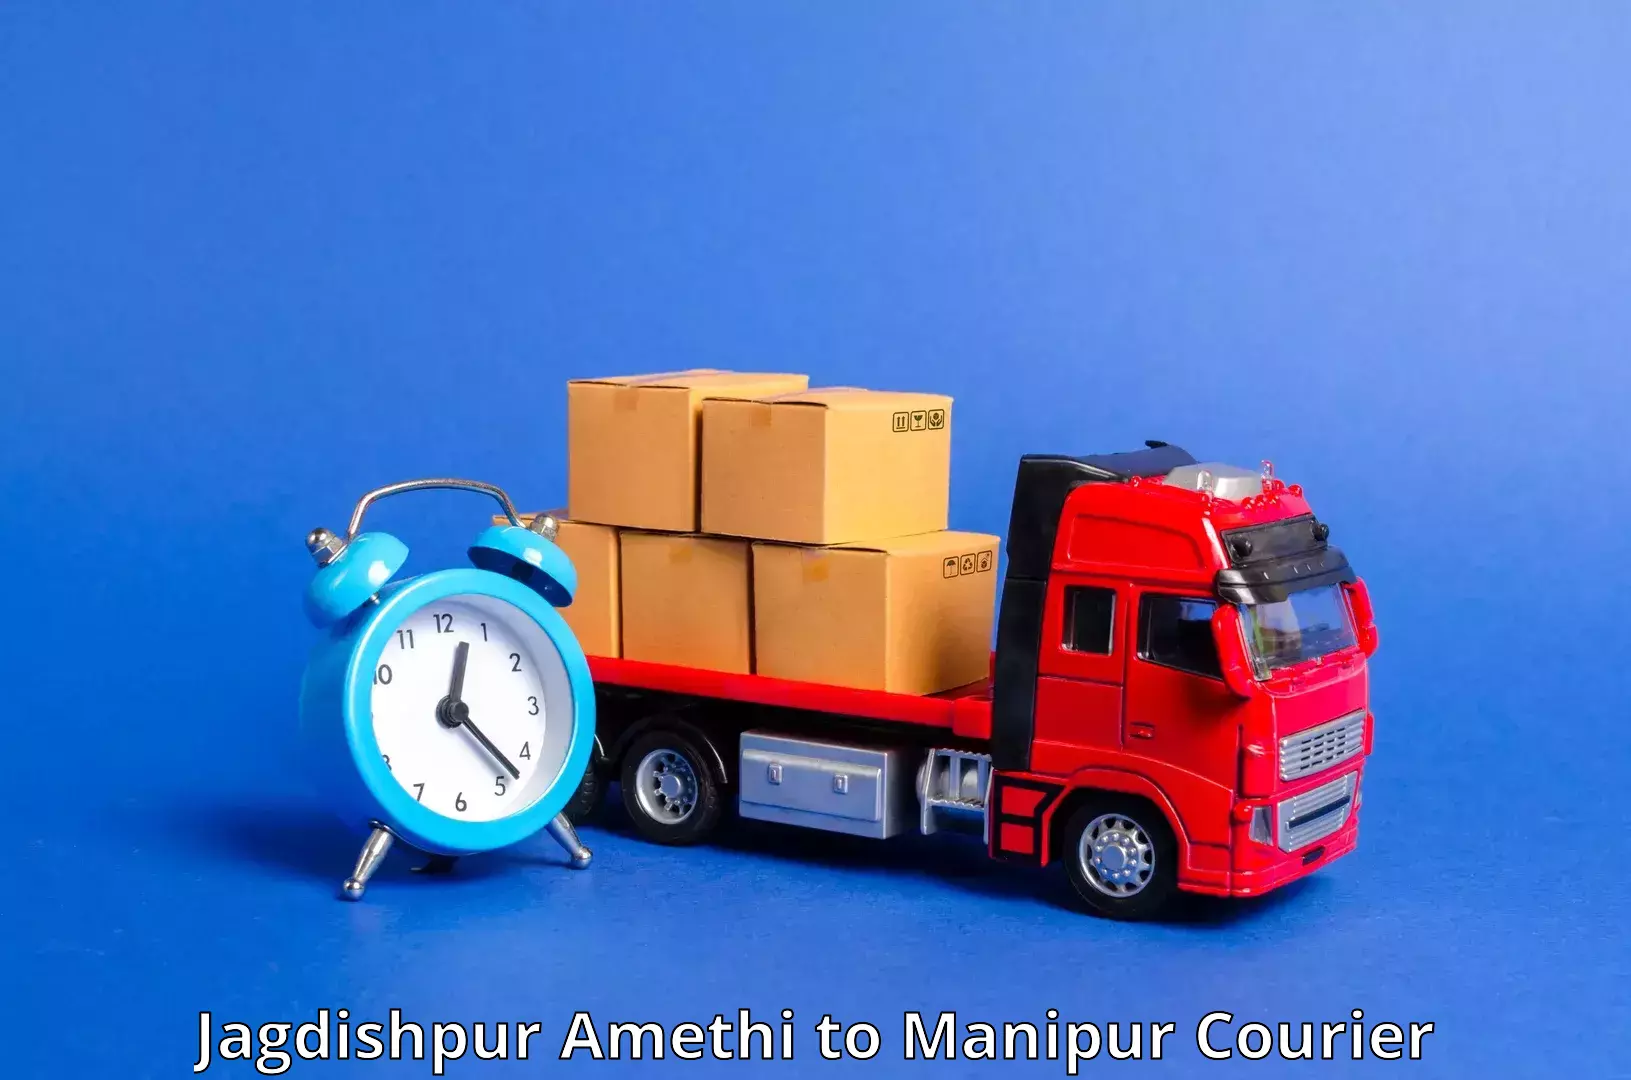 Fast delivery service Jagdishpur Amethi to Imphal